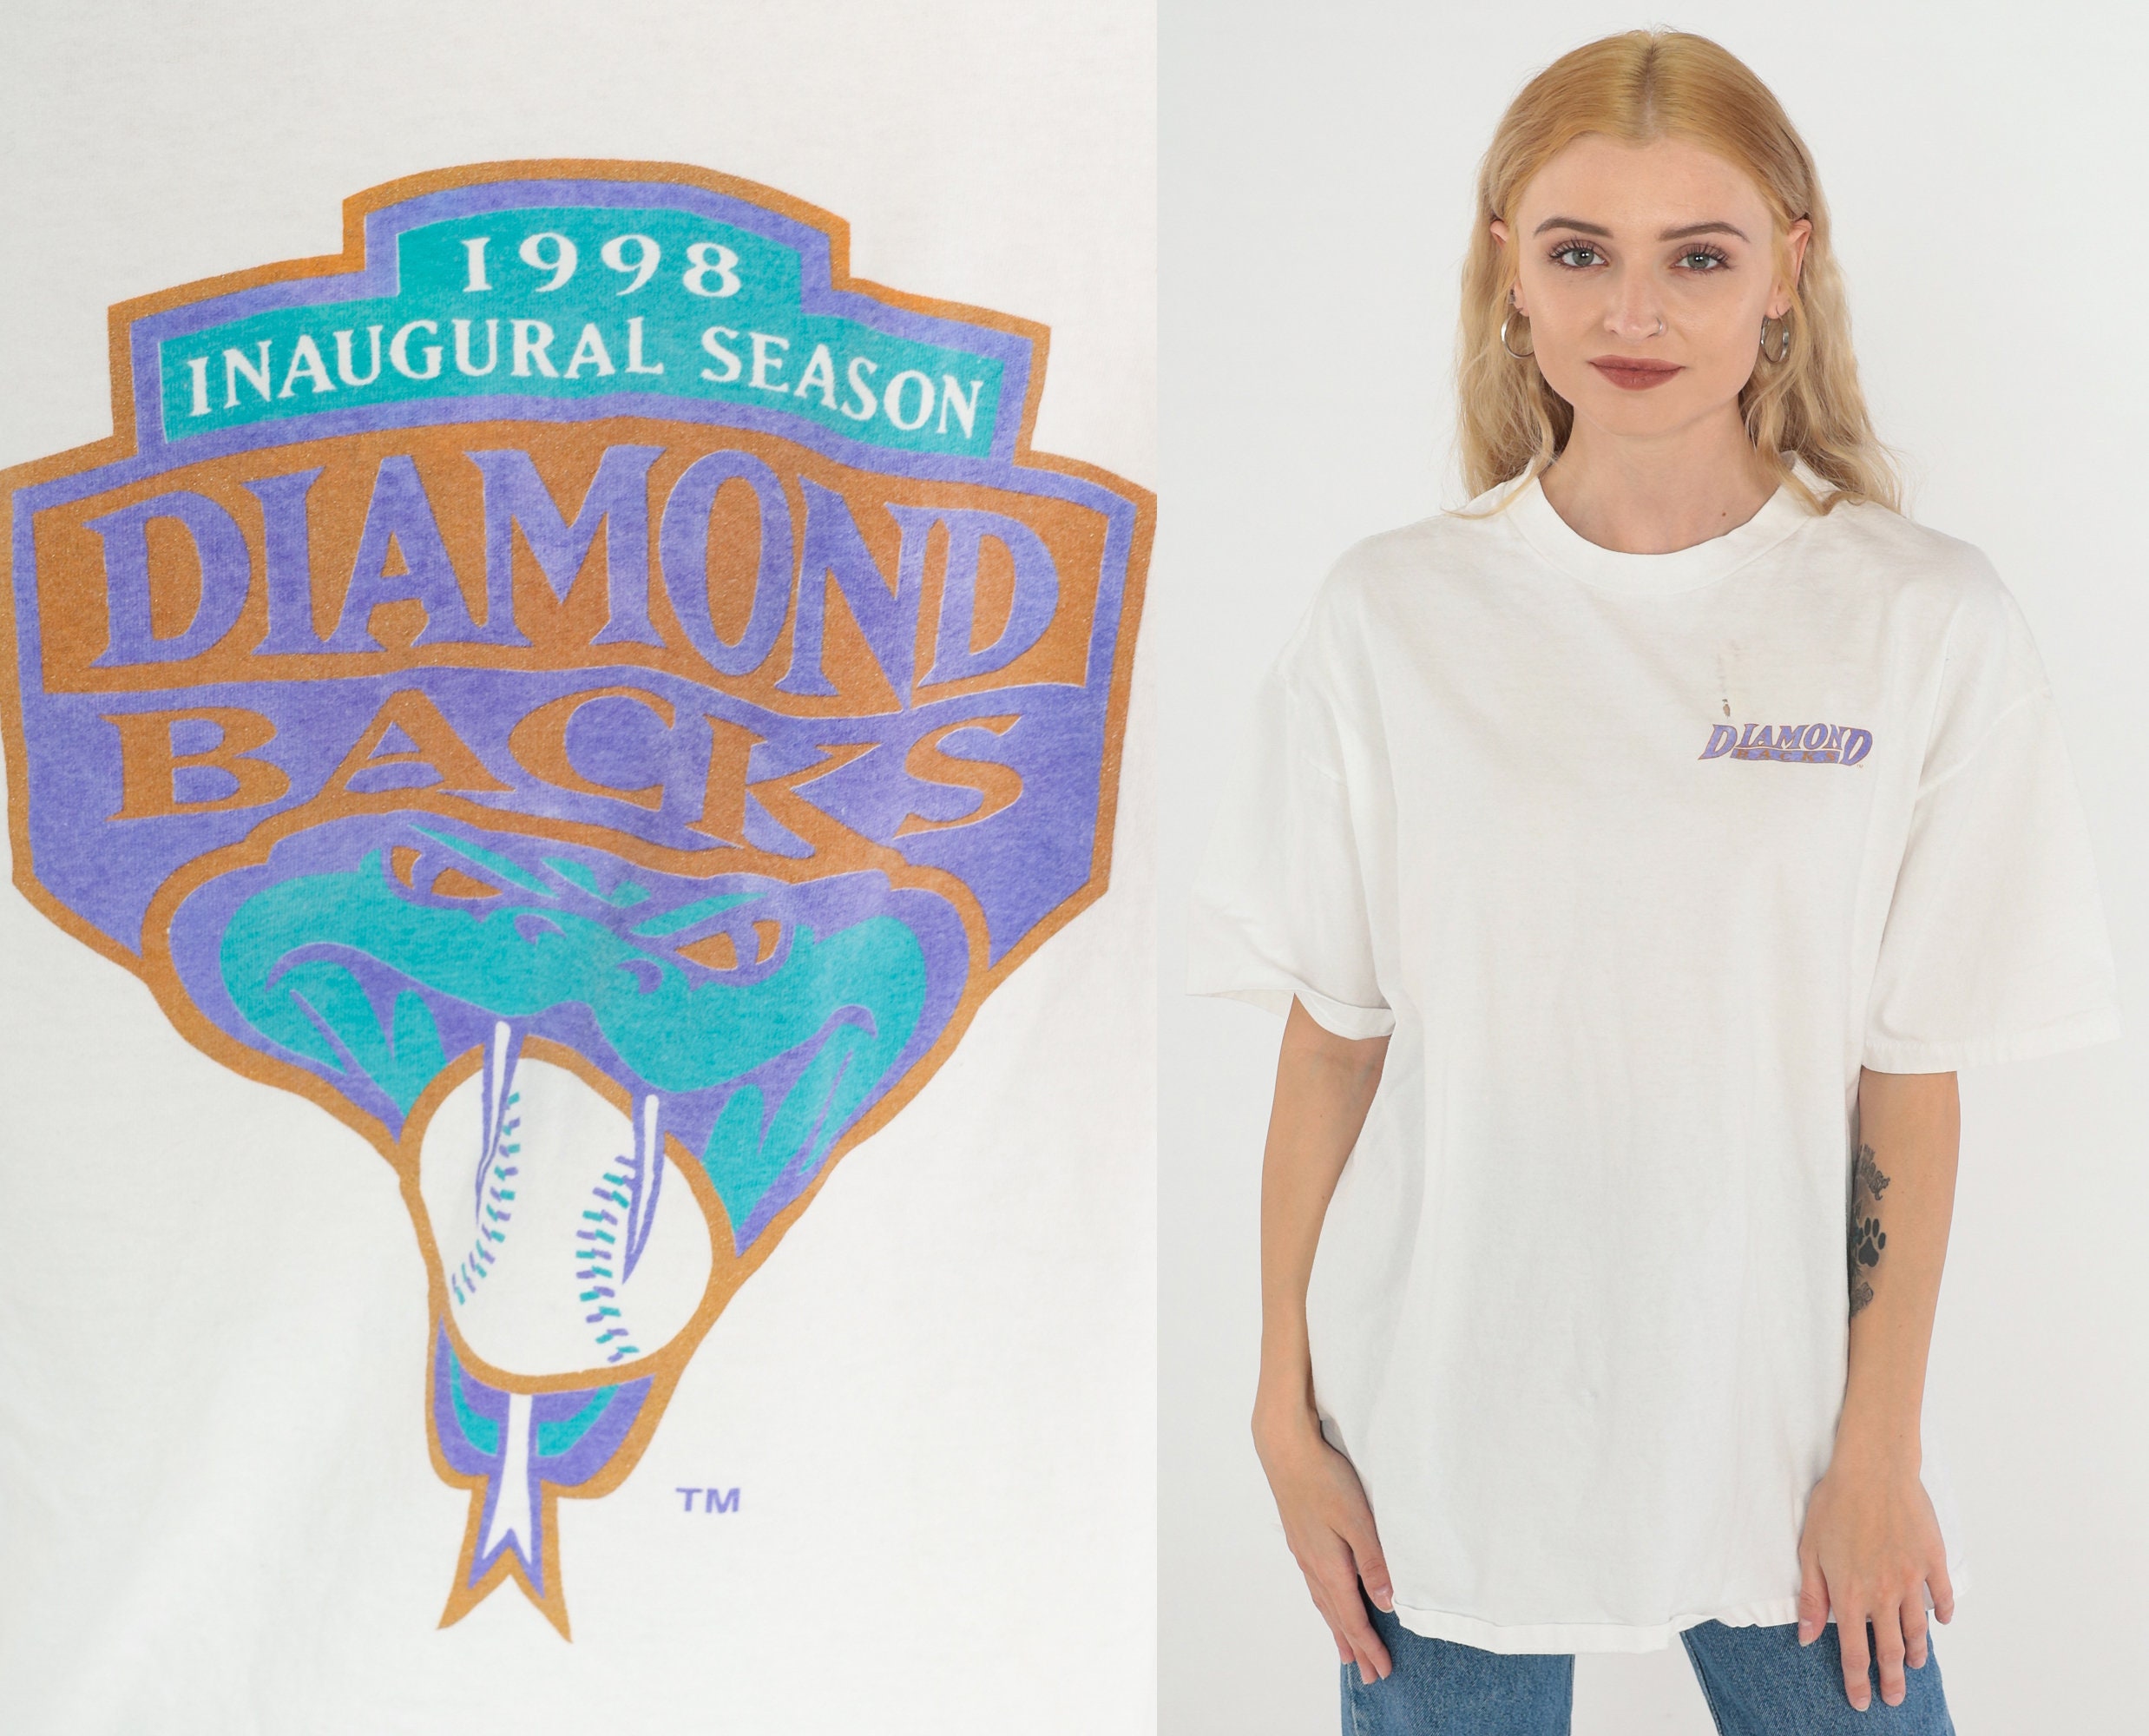 Arizona Diamondbacks Shirt 90s Baseball T-shirt 1998 Inaugural